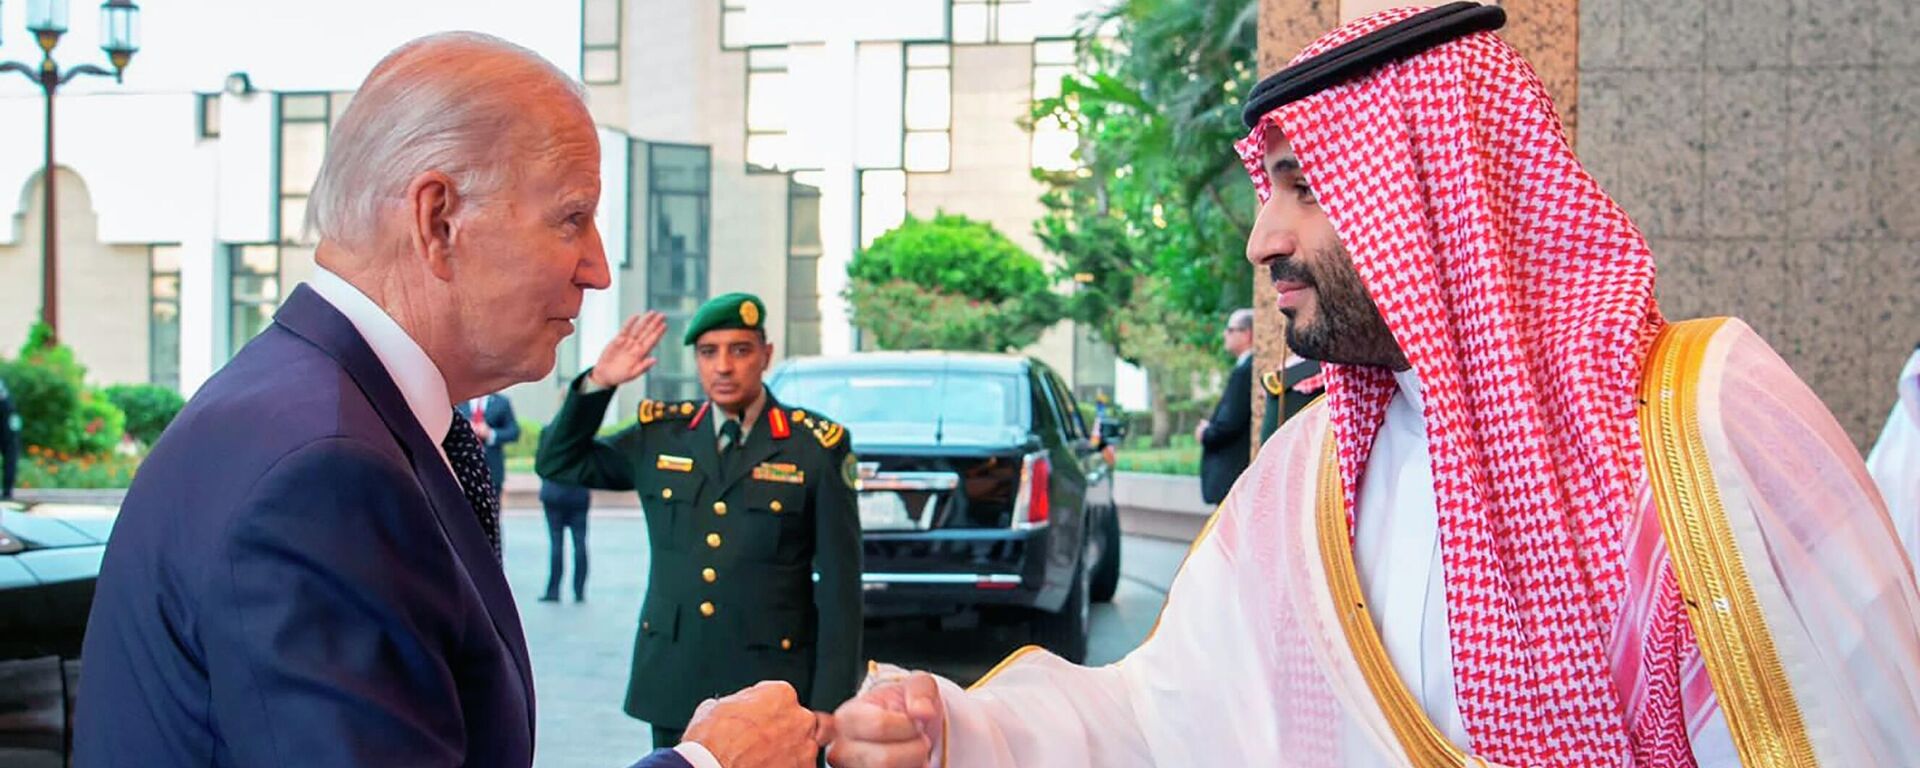 O presidente norte-americano, Joe Biden (à esquerda), cumprimenta o príncipe saudita Mohammed bin Salman, após chegar a Jeddah, na Arábia Saudita - Sputnik Brasil, 1920, 15.07.2022